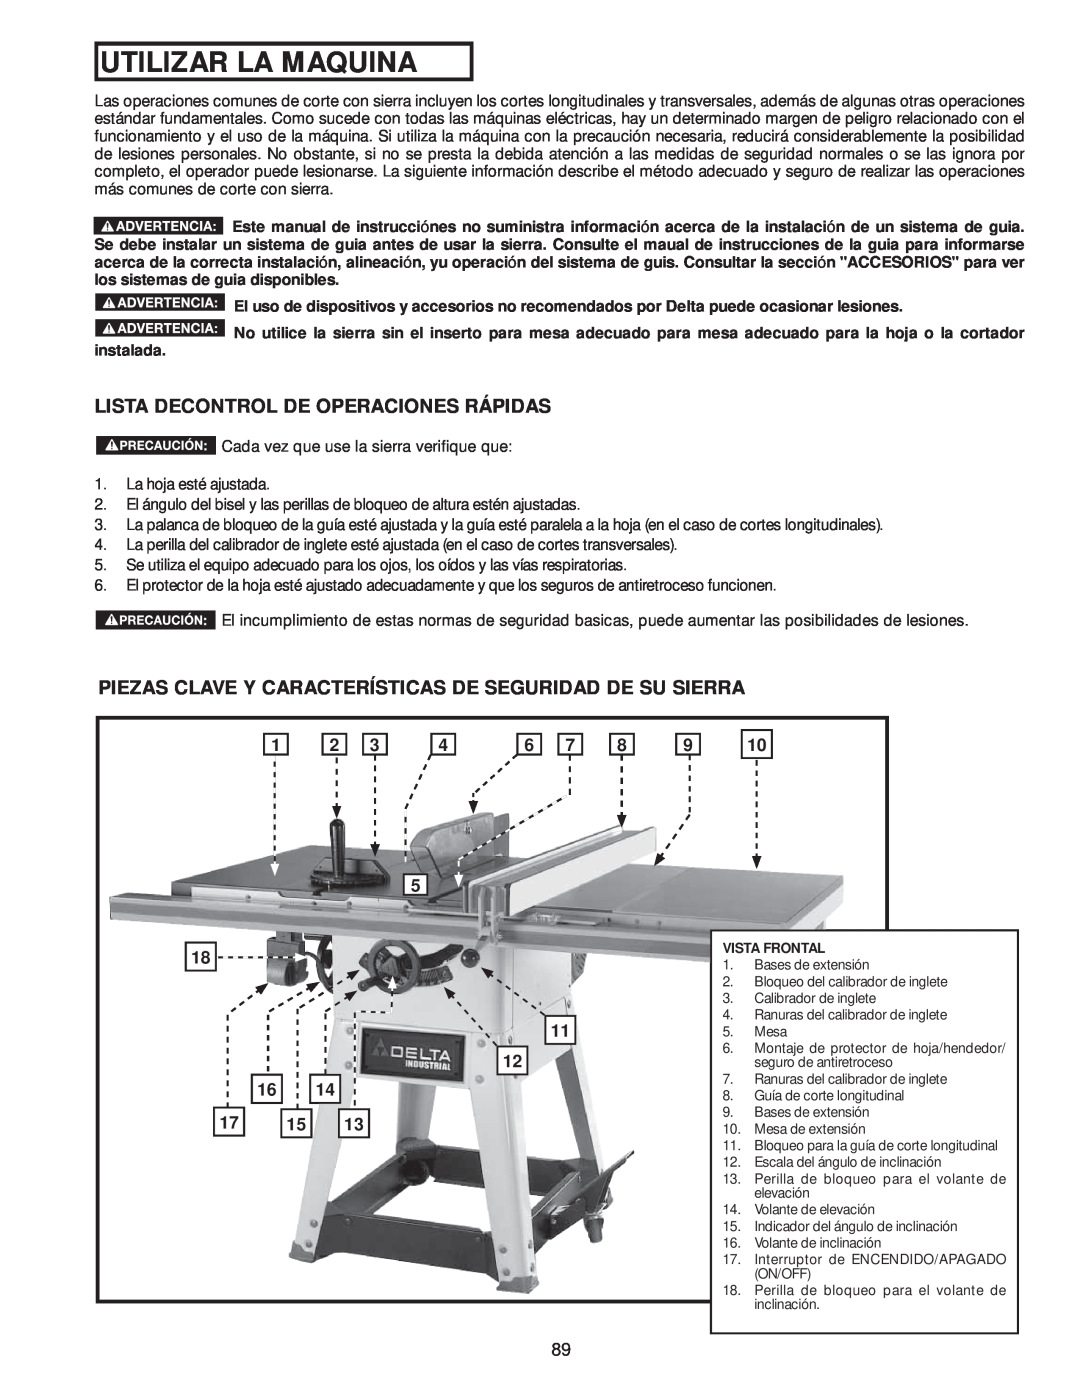 Delta 36-978, 36-979 instruction manual Utilizar La Maquina, Lista Decontrol De Operaciones Rápidas 